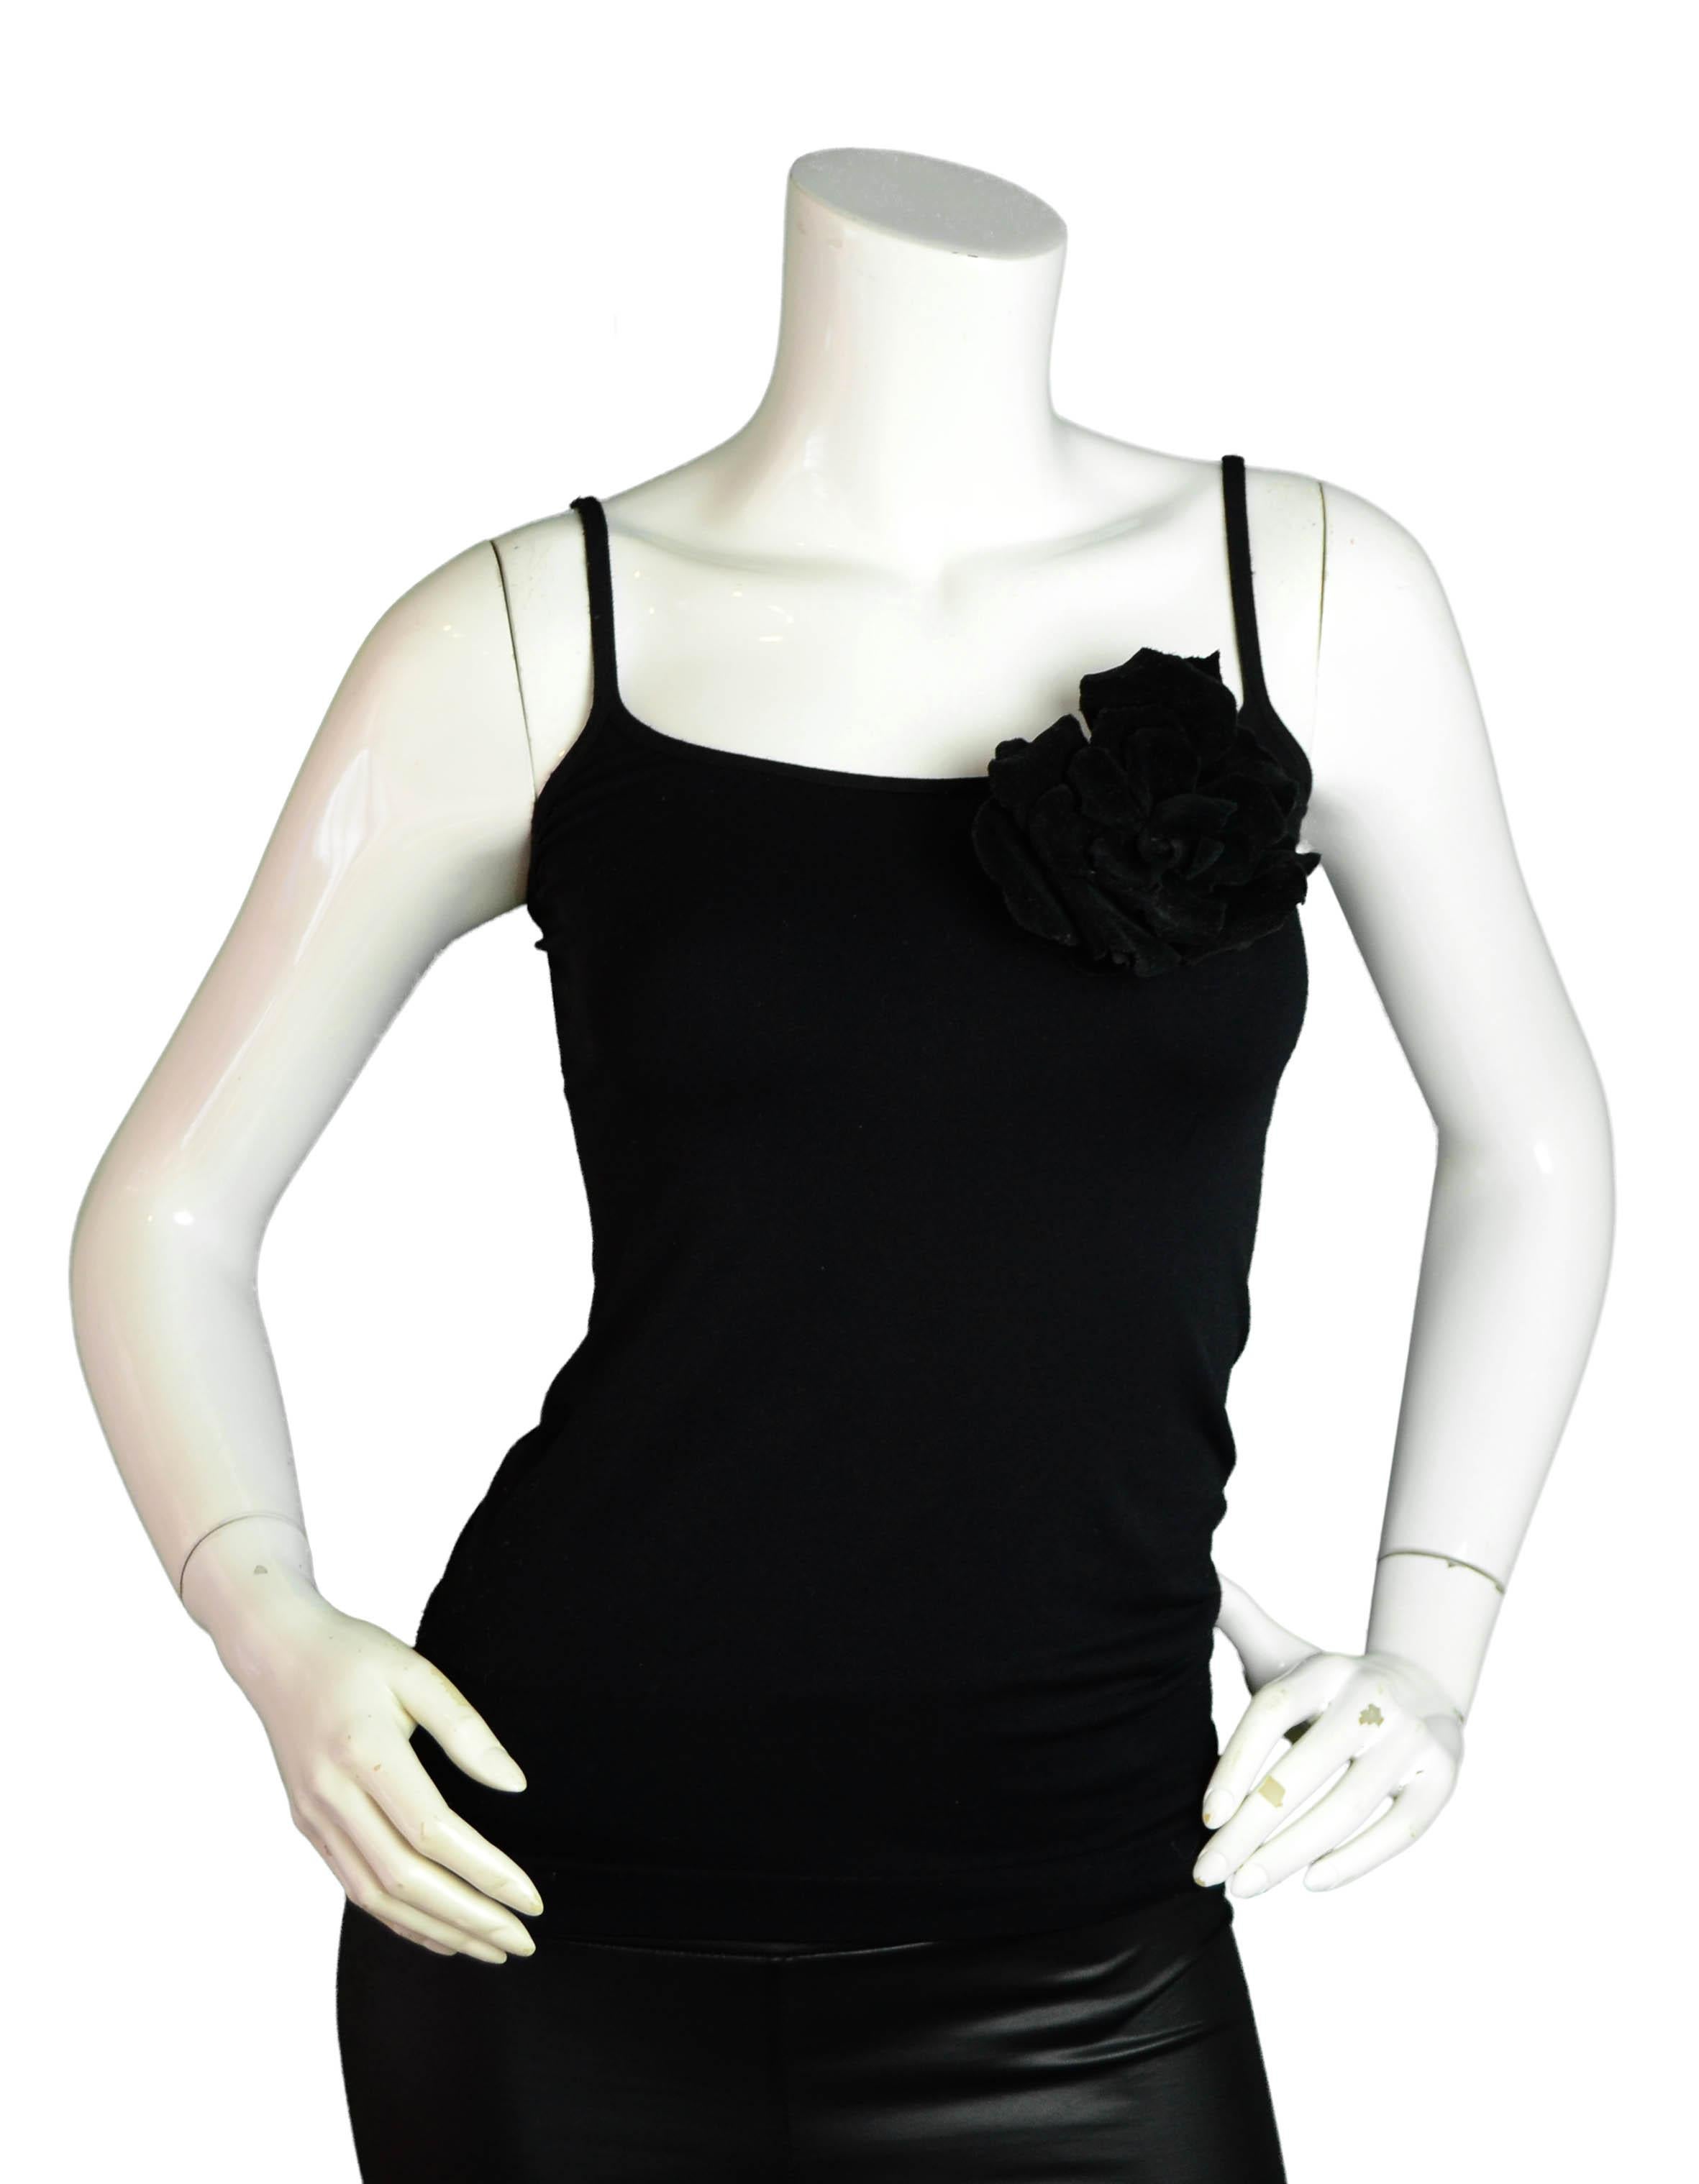 Chanel Black XL Camellia Brooch

Made In: France
Color: Black
Materials: Velvet
Hallmarks:  